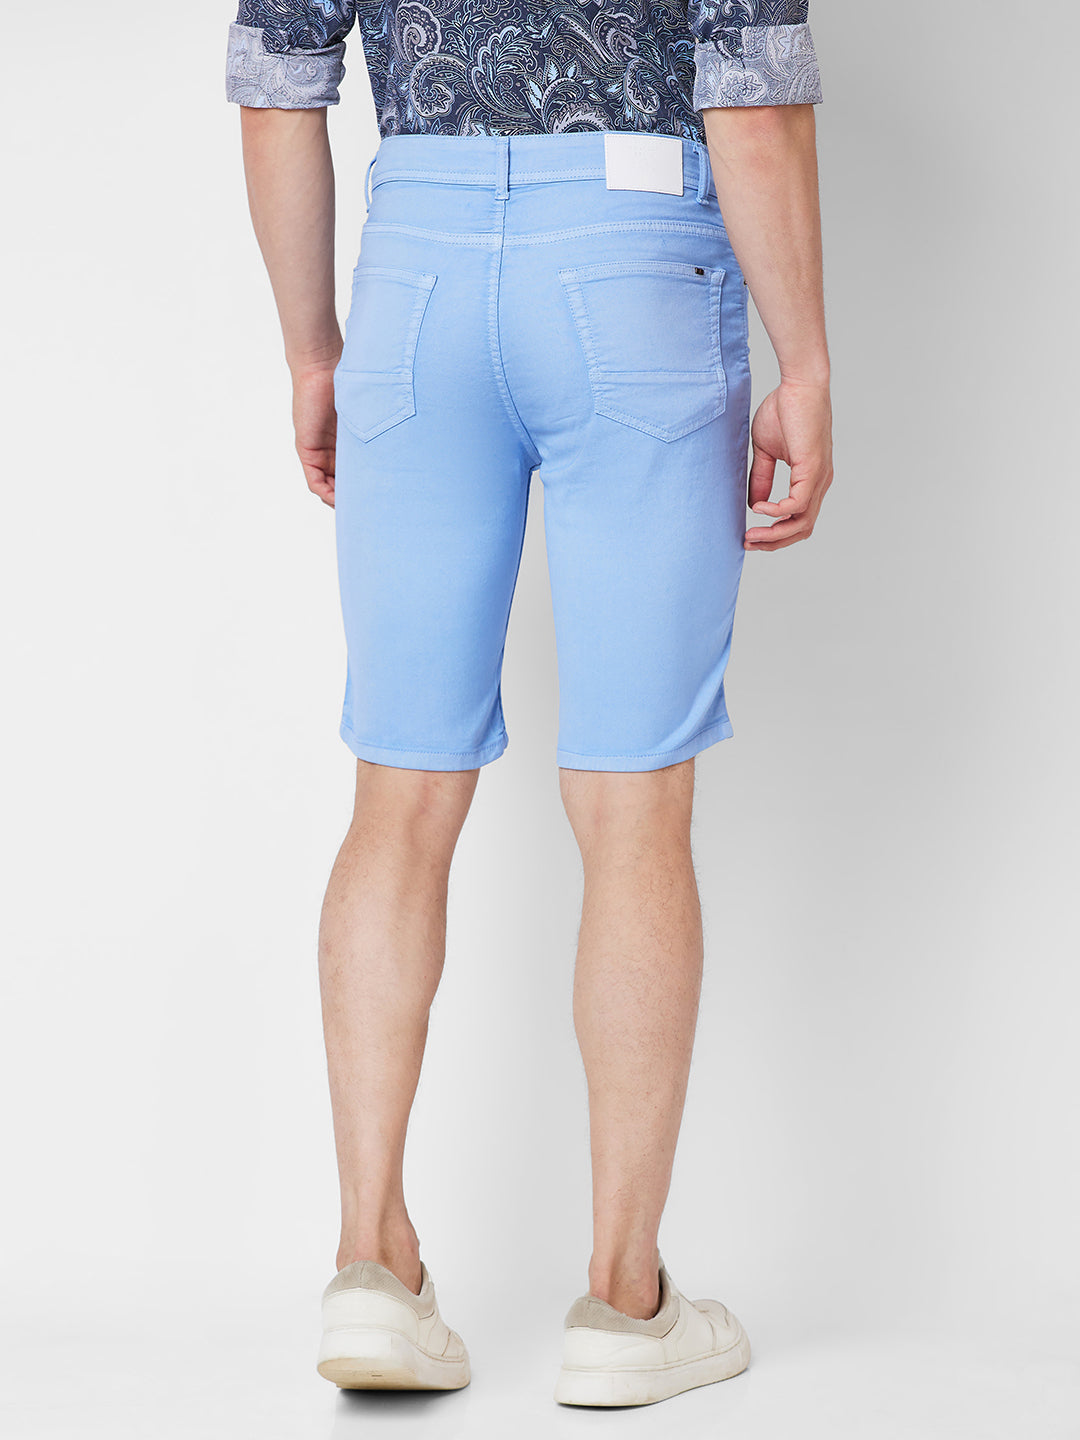 Sky Blue Shorts For Mens